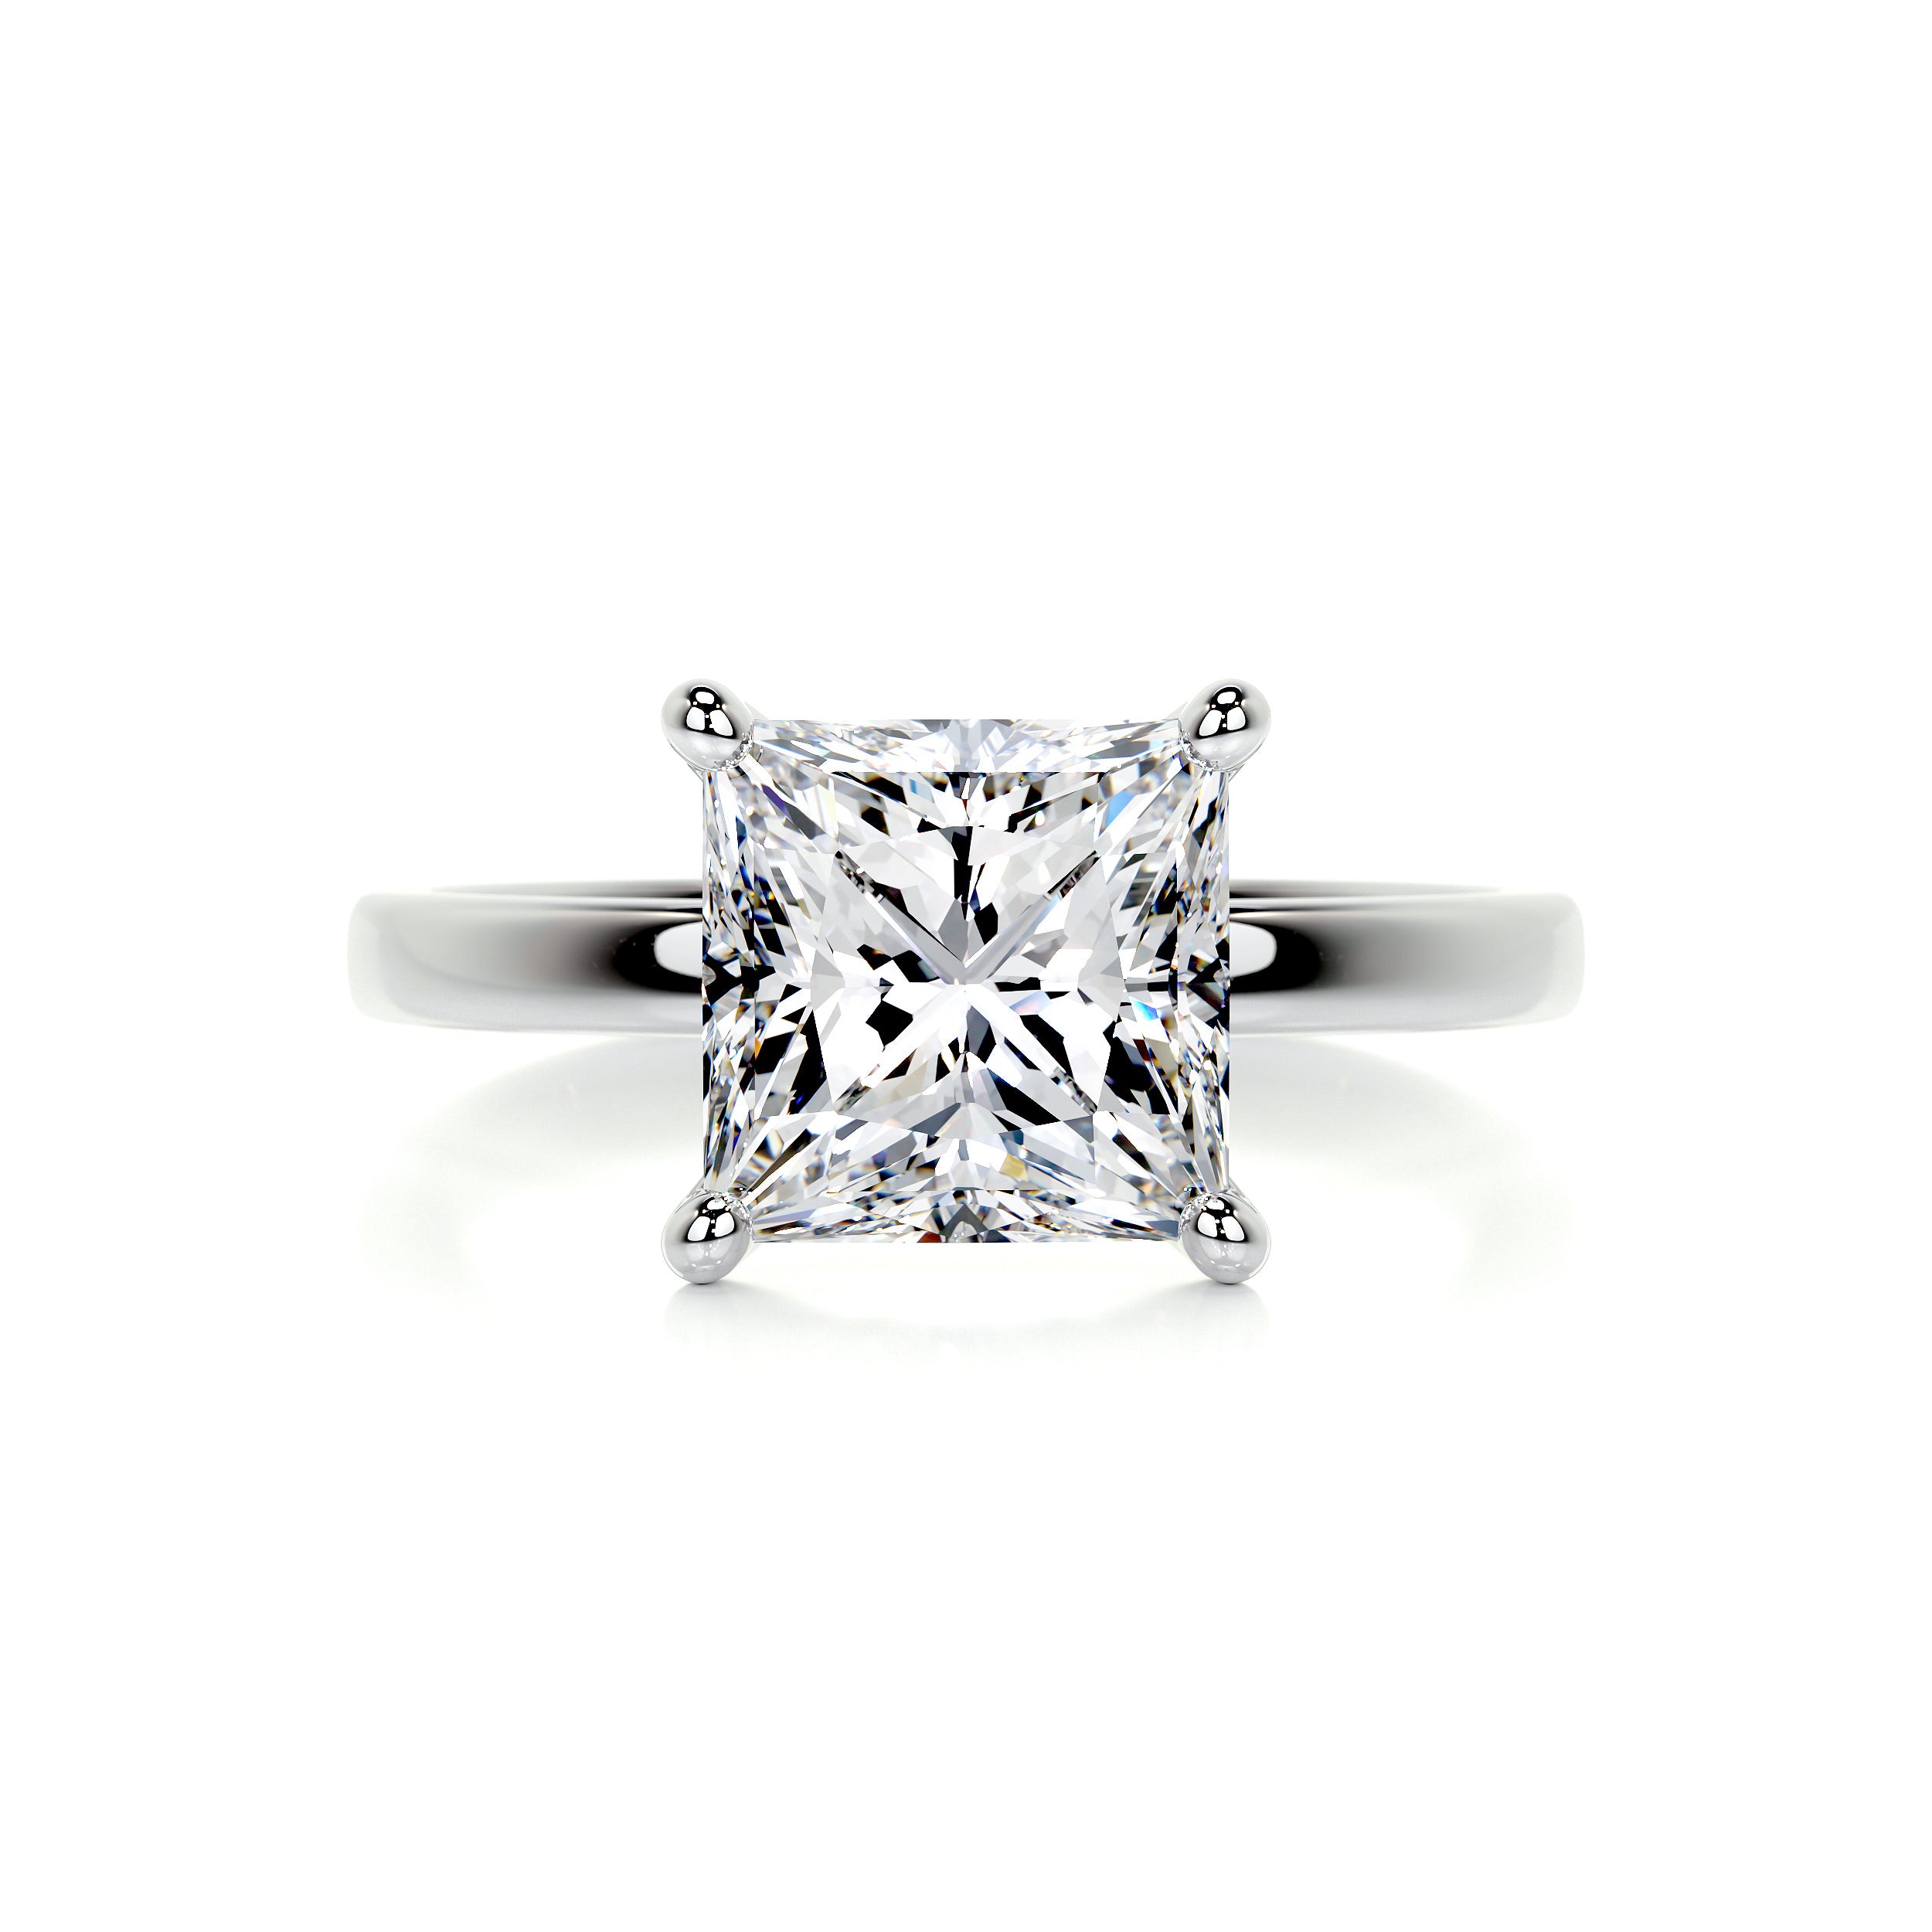 Jessica Diamond Engagement Ring   (3 Carat) -18K White Gold